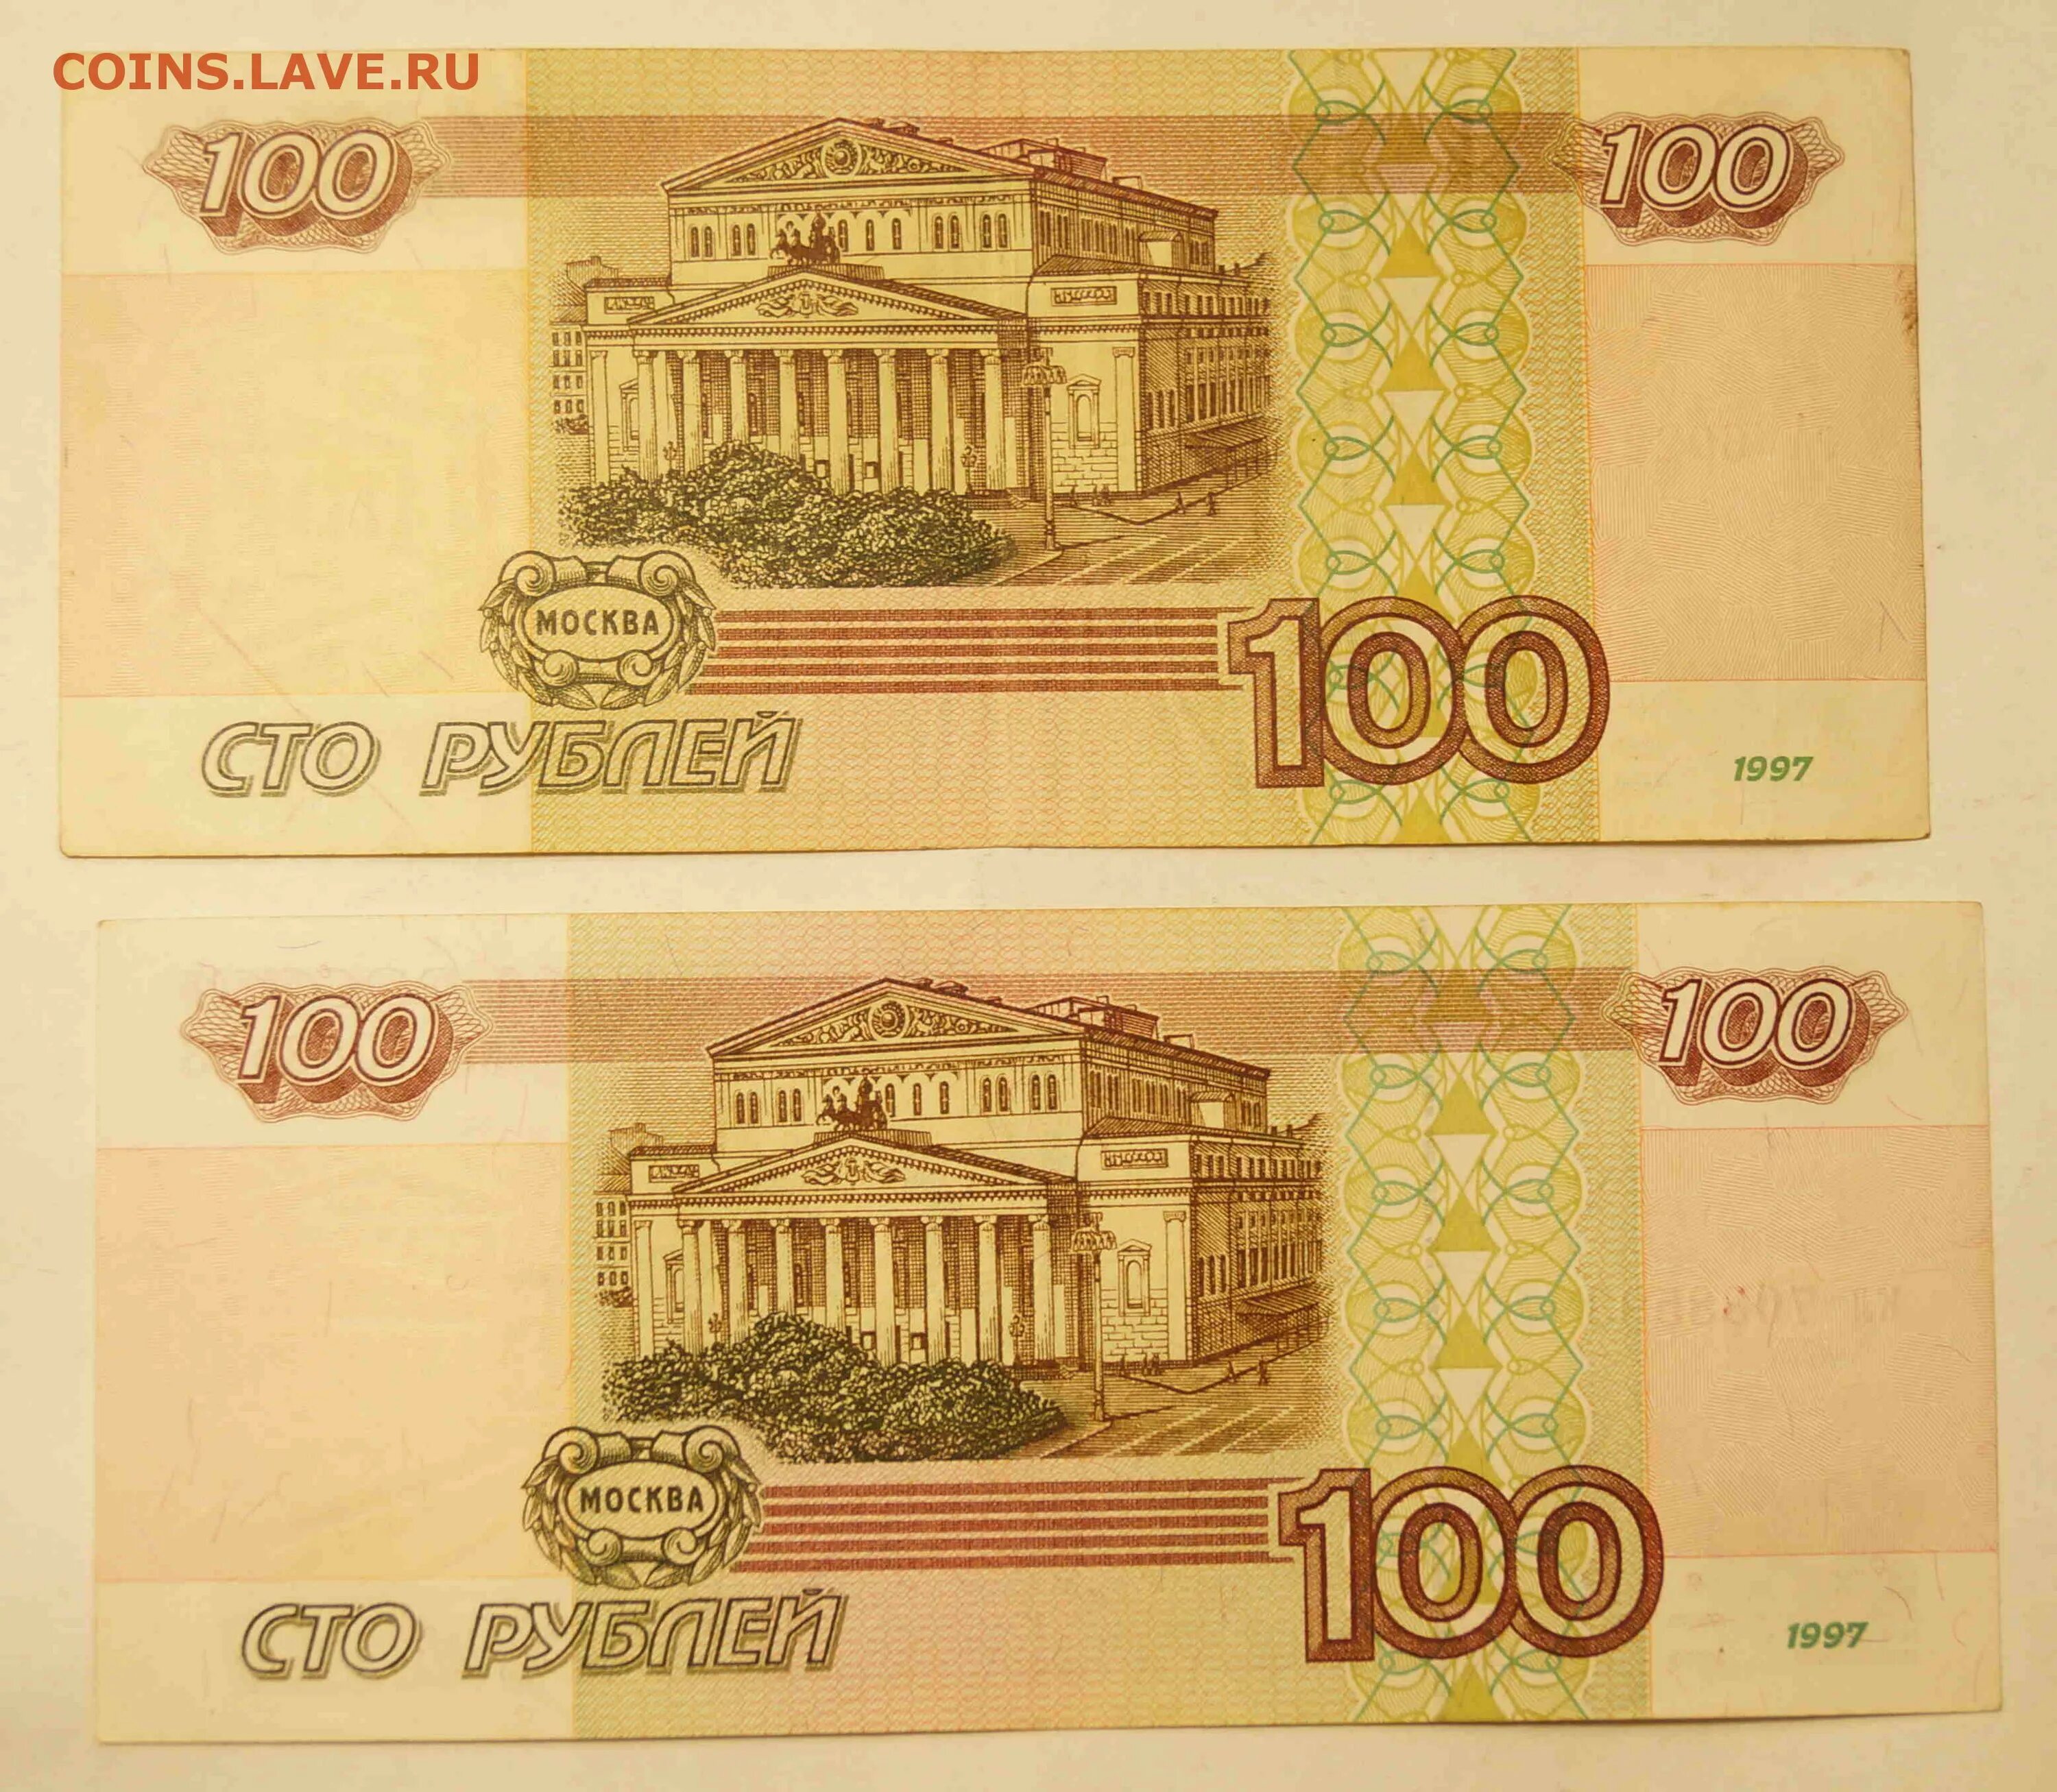 100000 на 1 год. Купюра 100 тысяч рублей 1995. СТО тысяч рублей купюра. 100 000 Рублей 1995 года. Купюра 100.000 руб.